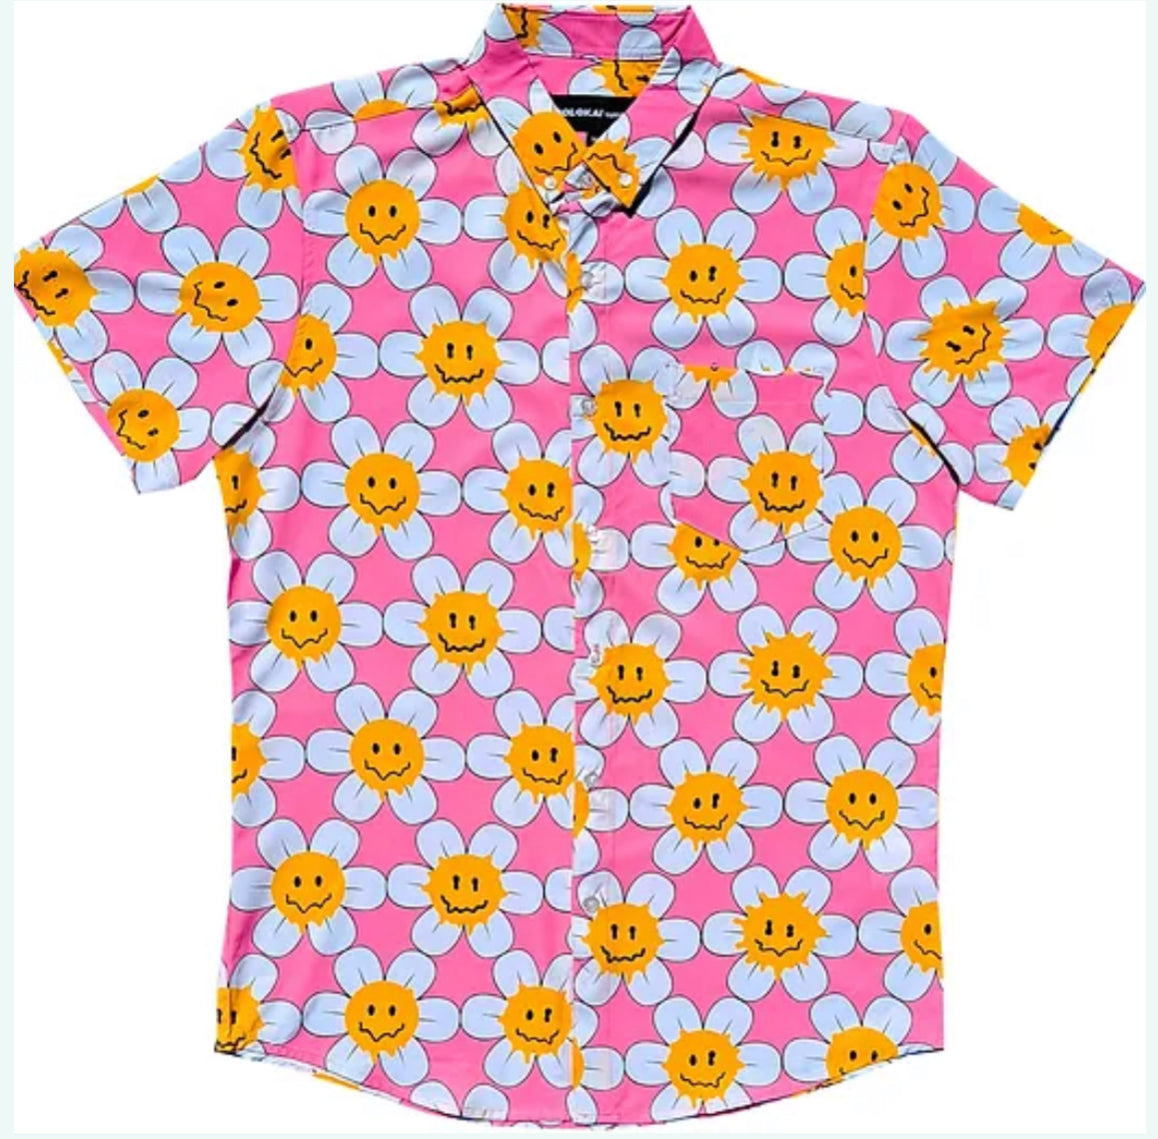 Molokai / Lanikai Vintage 100% Rayon Shirt- pink happy daisy